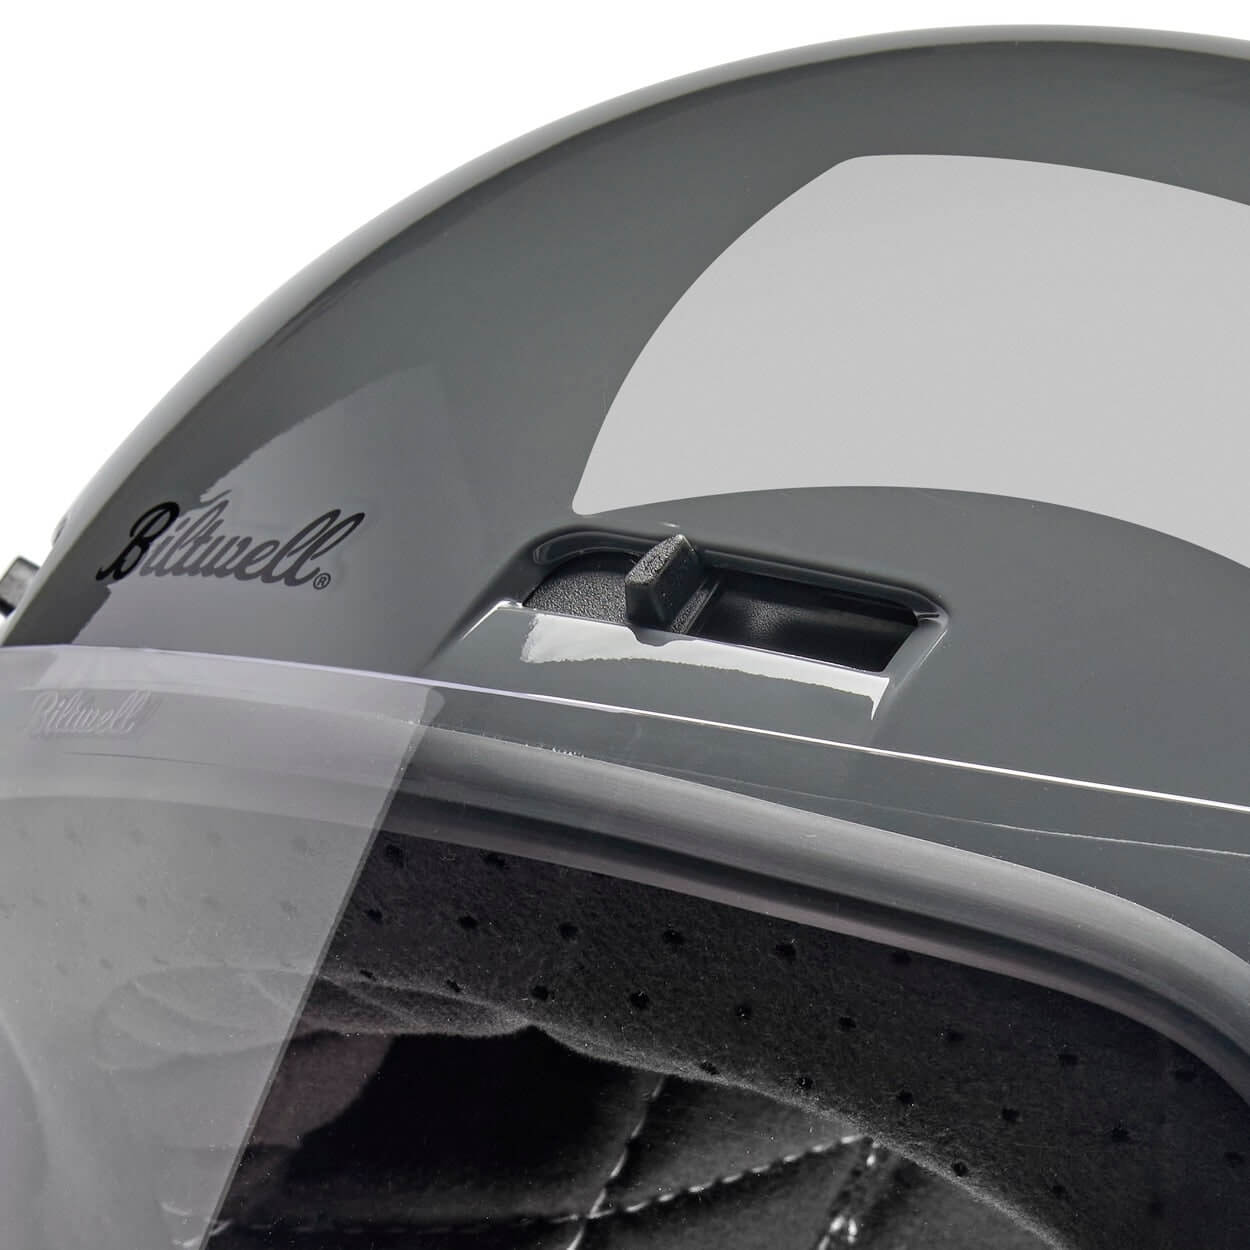 Biltwell Inc | Gringo SV Helmet - Gloss Storm Grey - XS - Motorcycle Helmet - Peak Moto